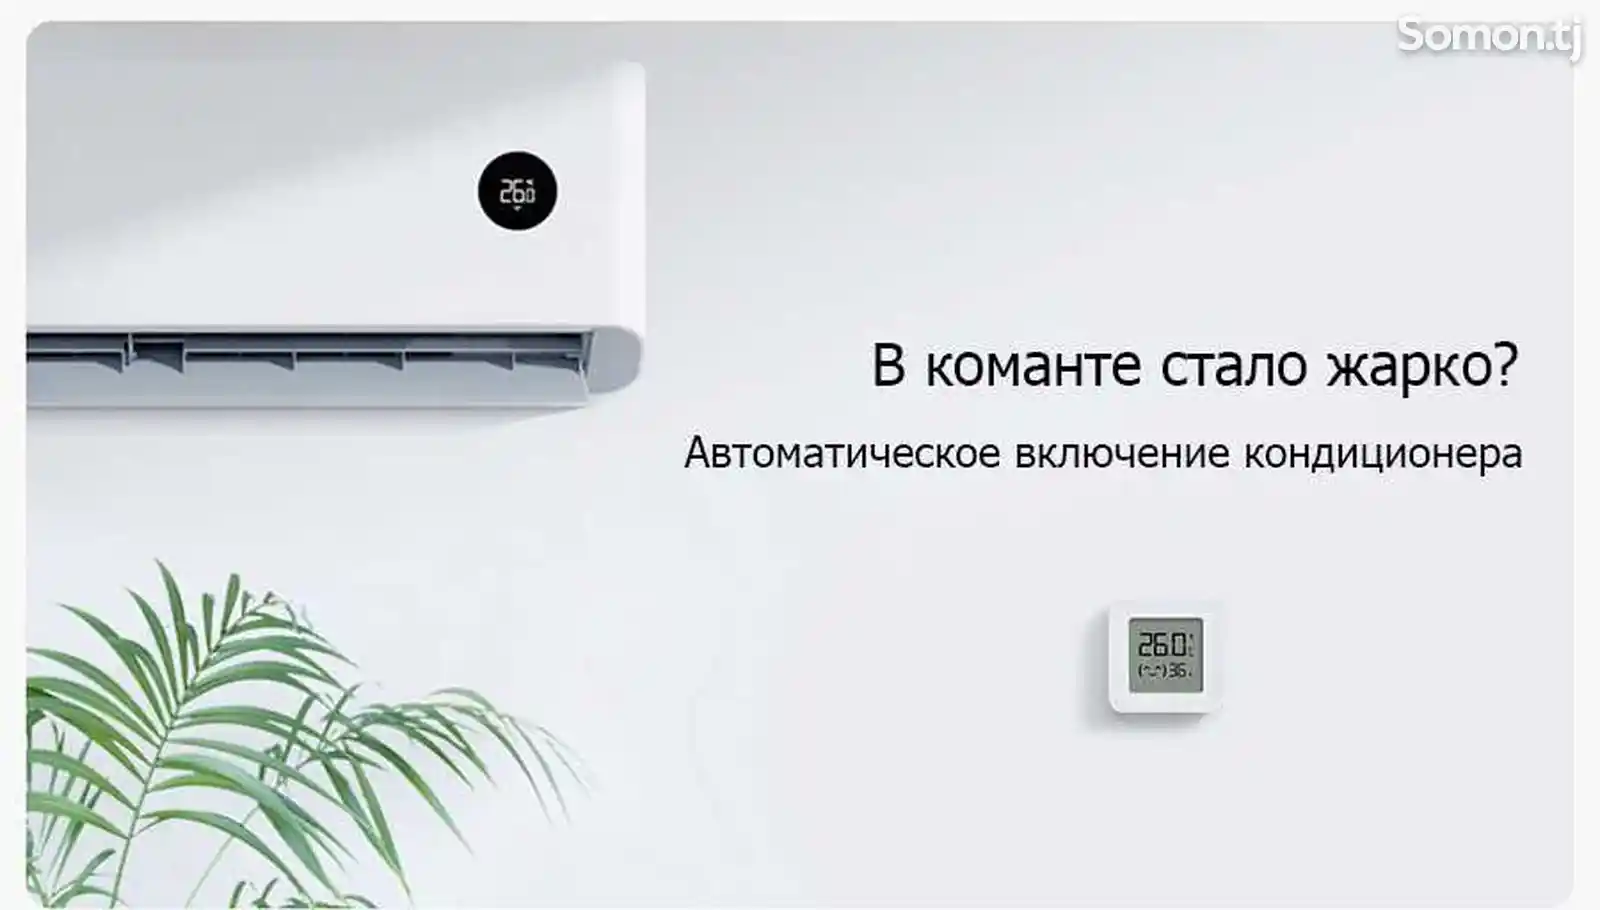 Термометр датчик температуры и влажности Xiaomi Hygrometer 2-7